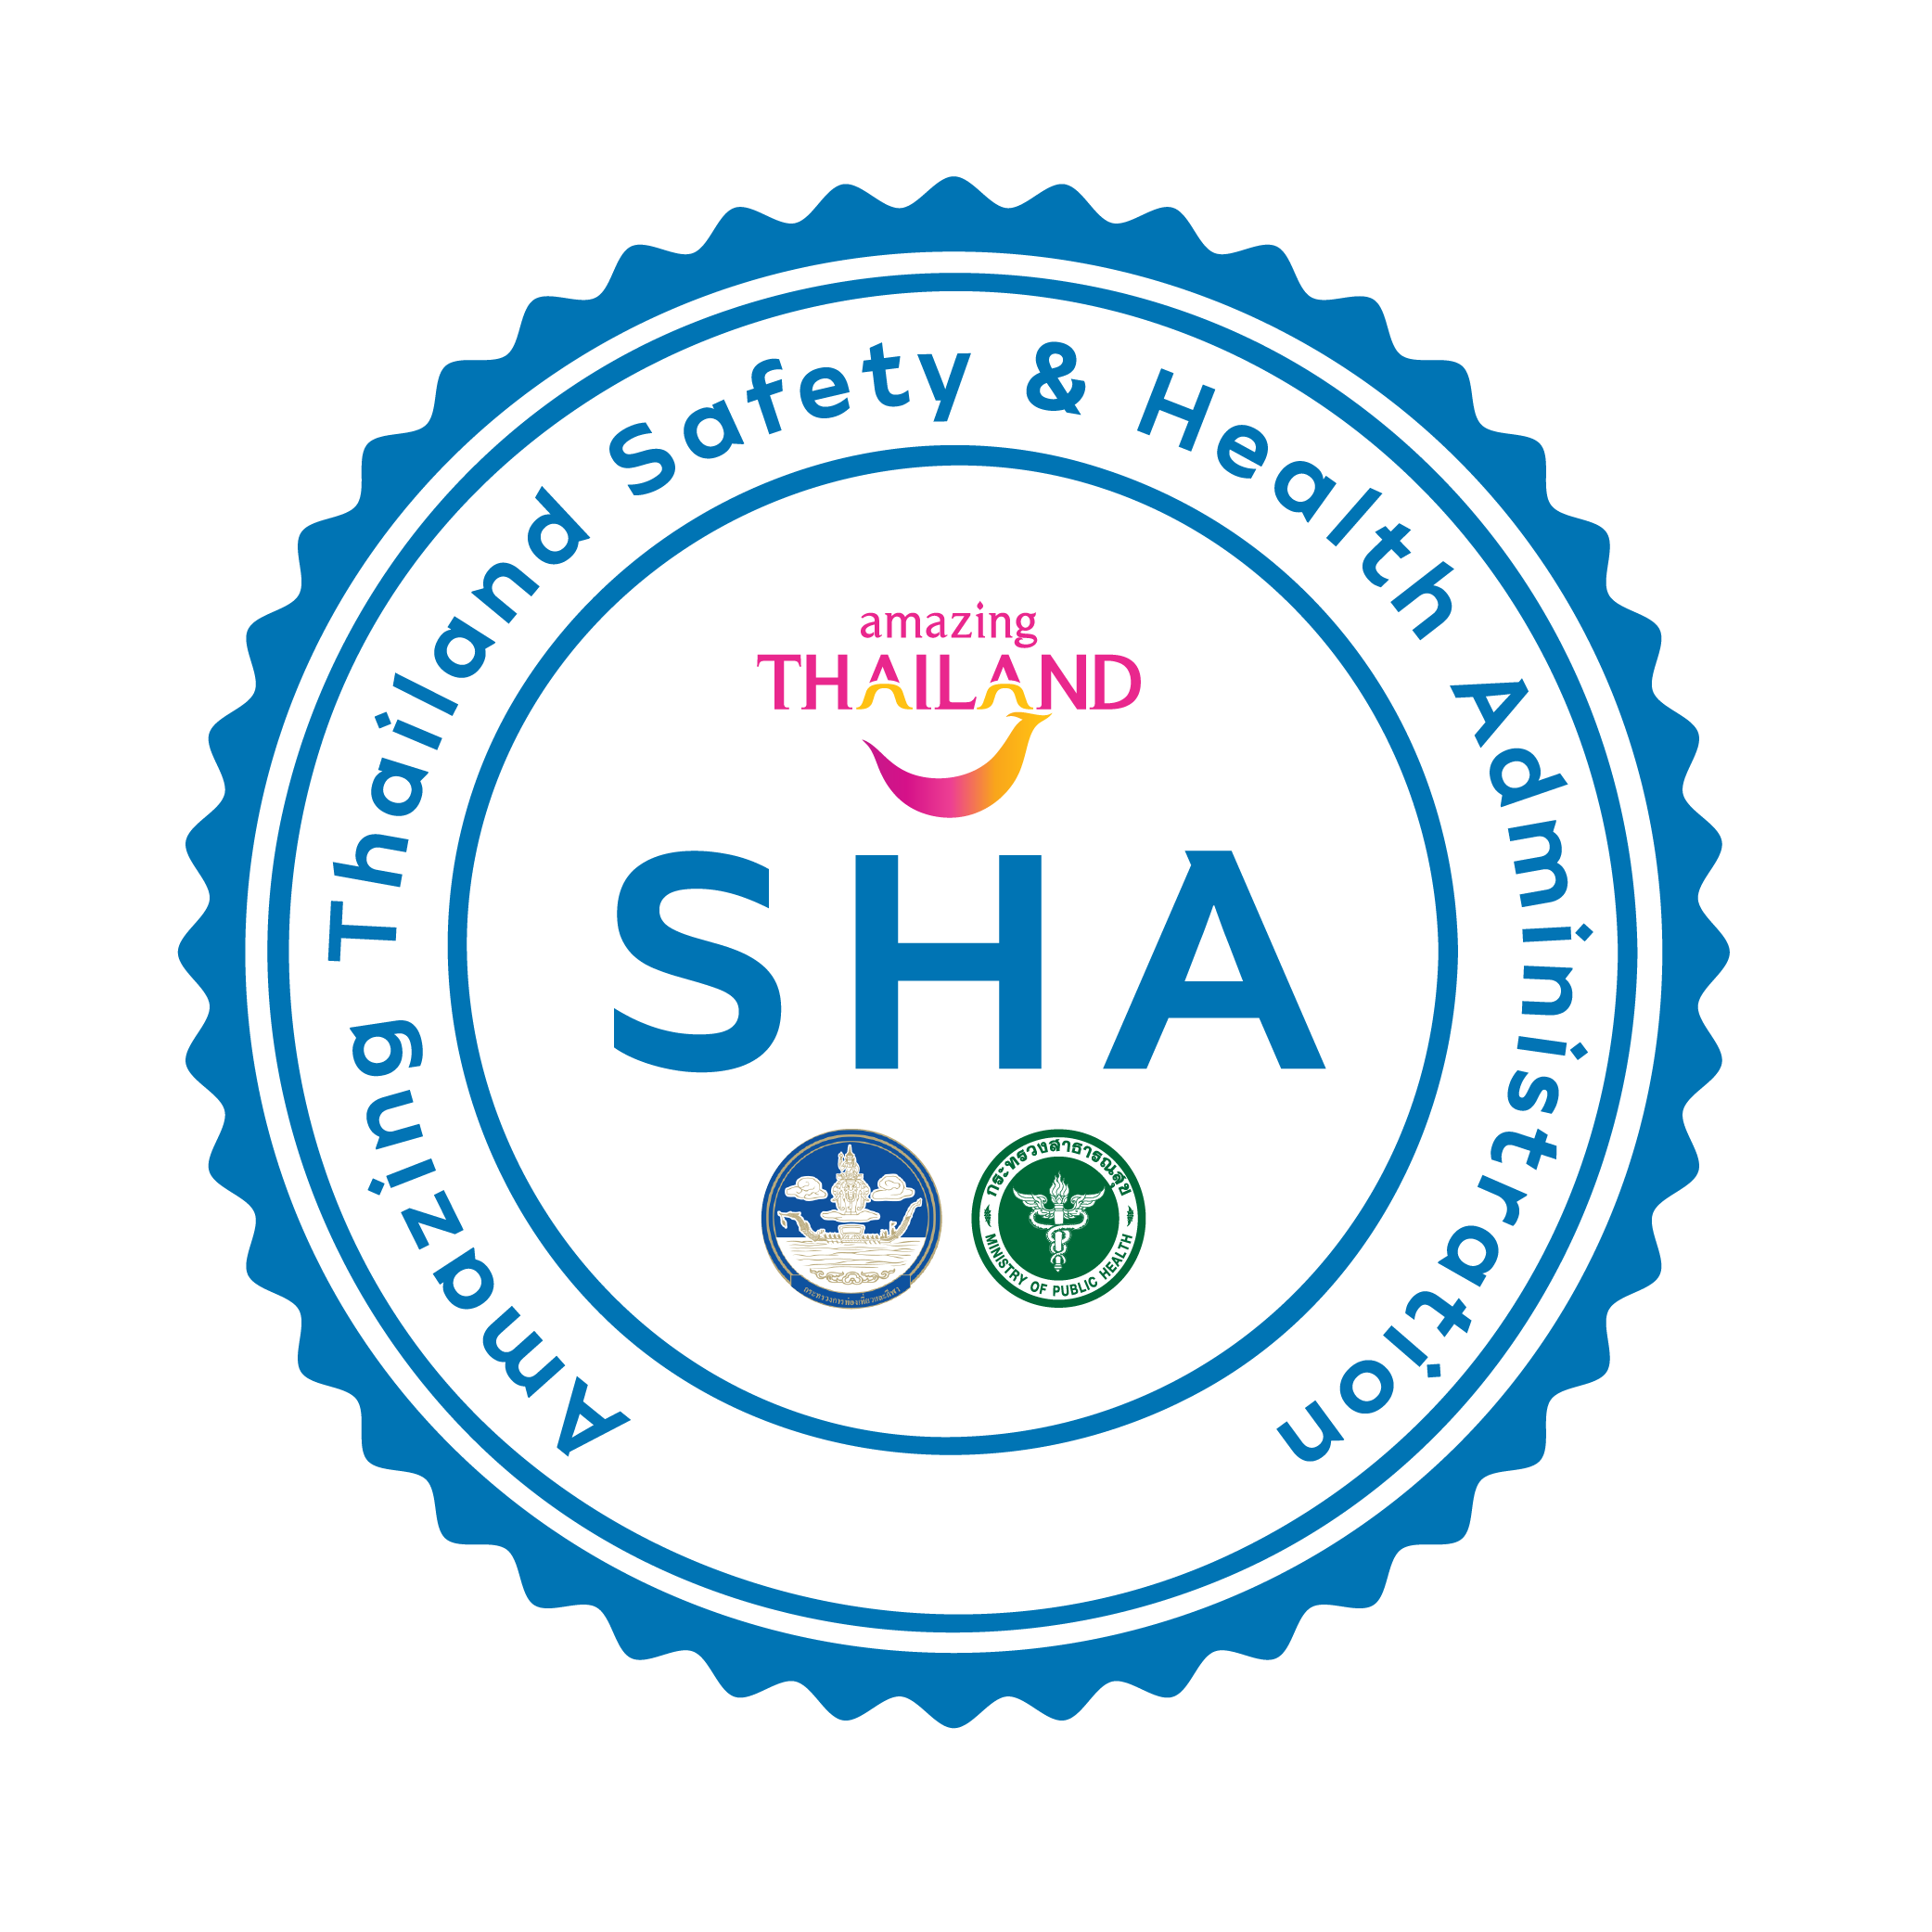 SHA_logo